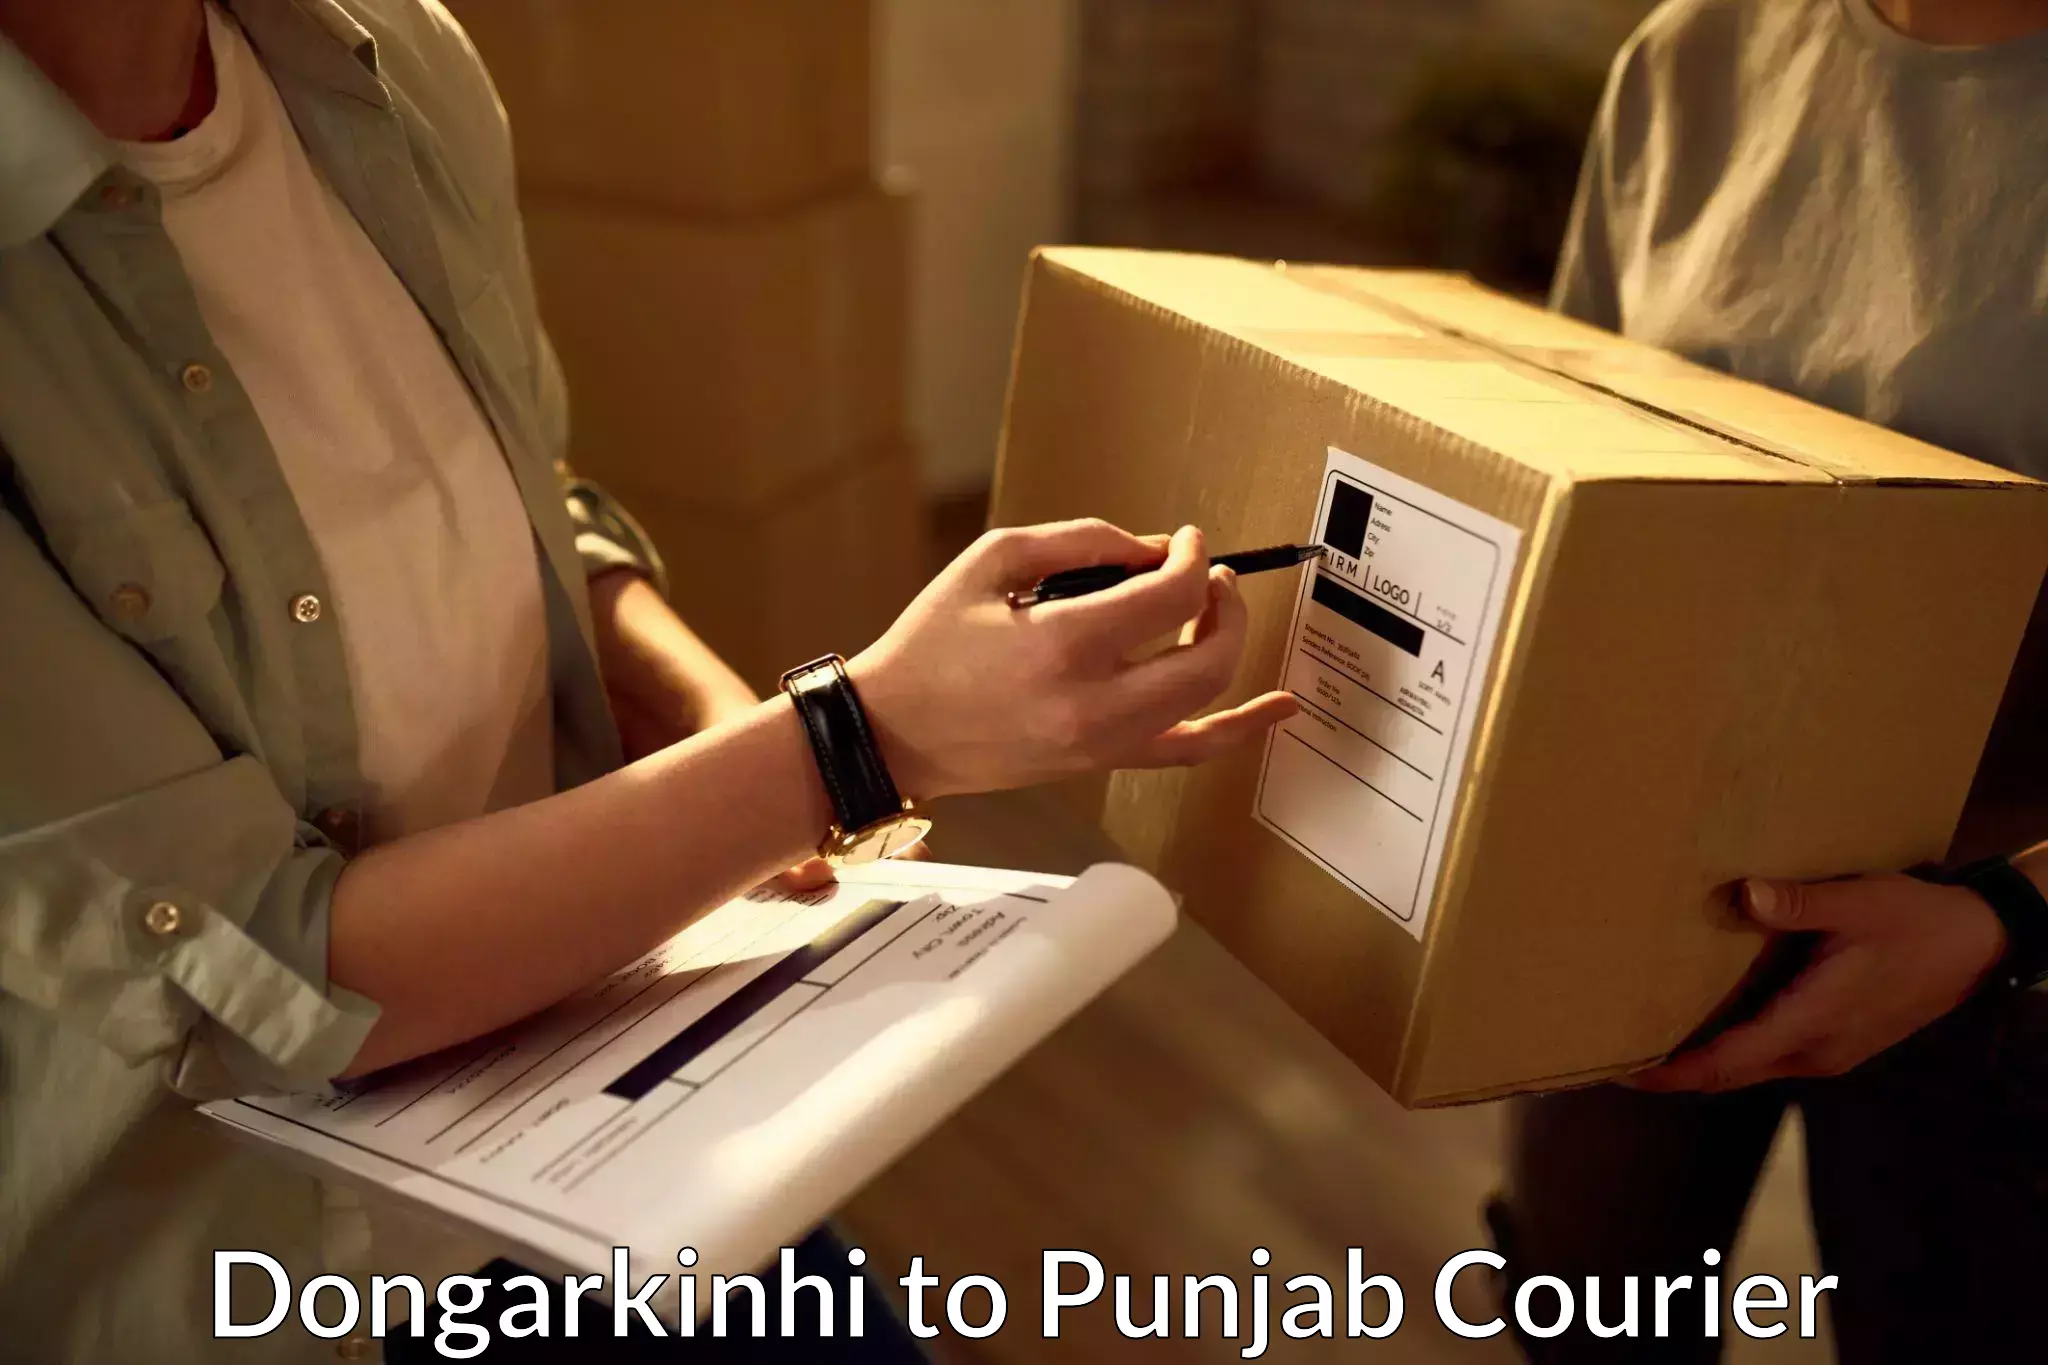 Budget-friendly shipping Dongarkinhi to Amritsar